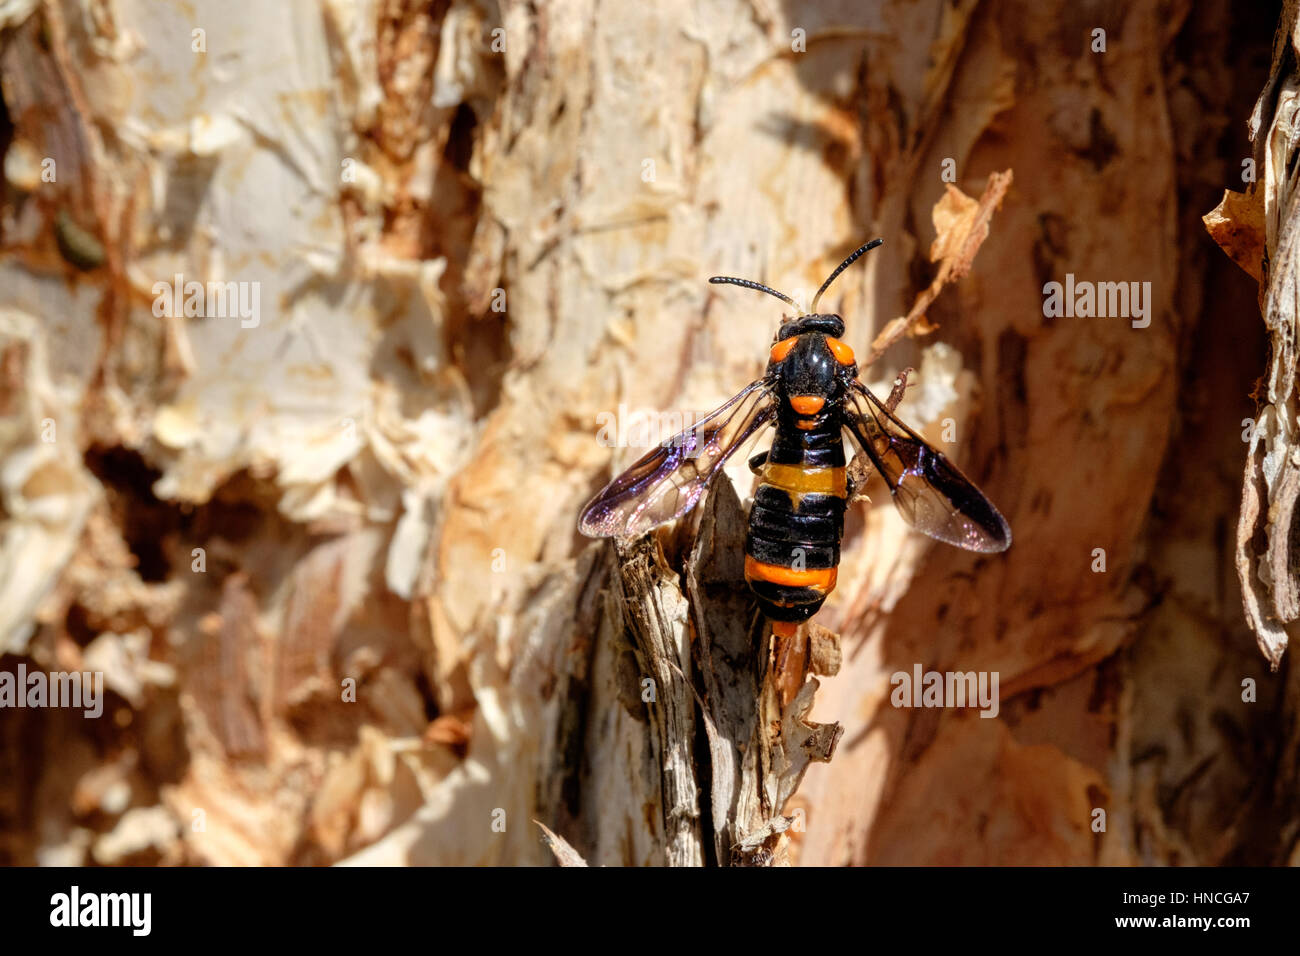 An adult malaleuca sawfly (Lyphrotoma zonalis) perched on the trunk of a paperbark tree, Melbourne, Australia. Stock Photo